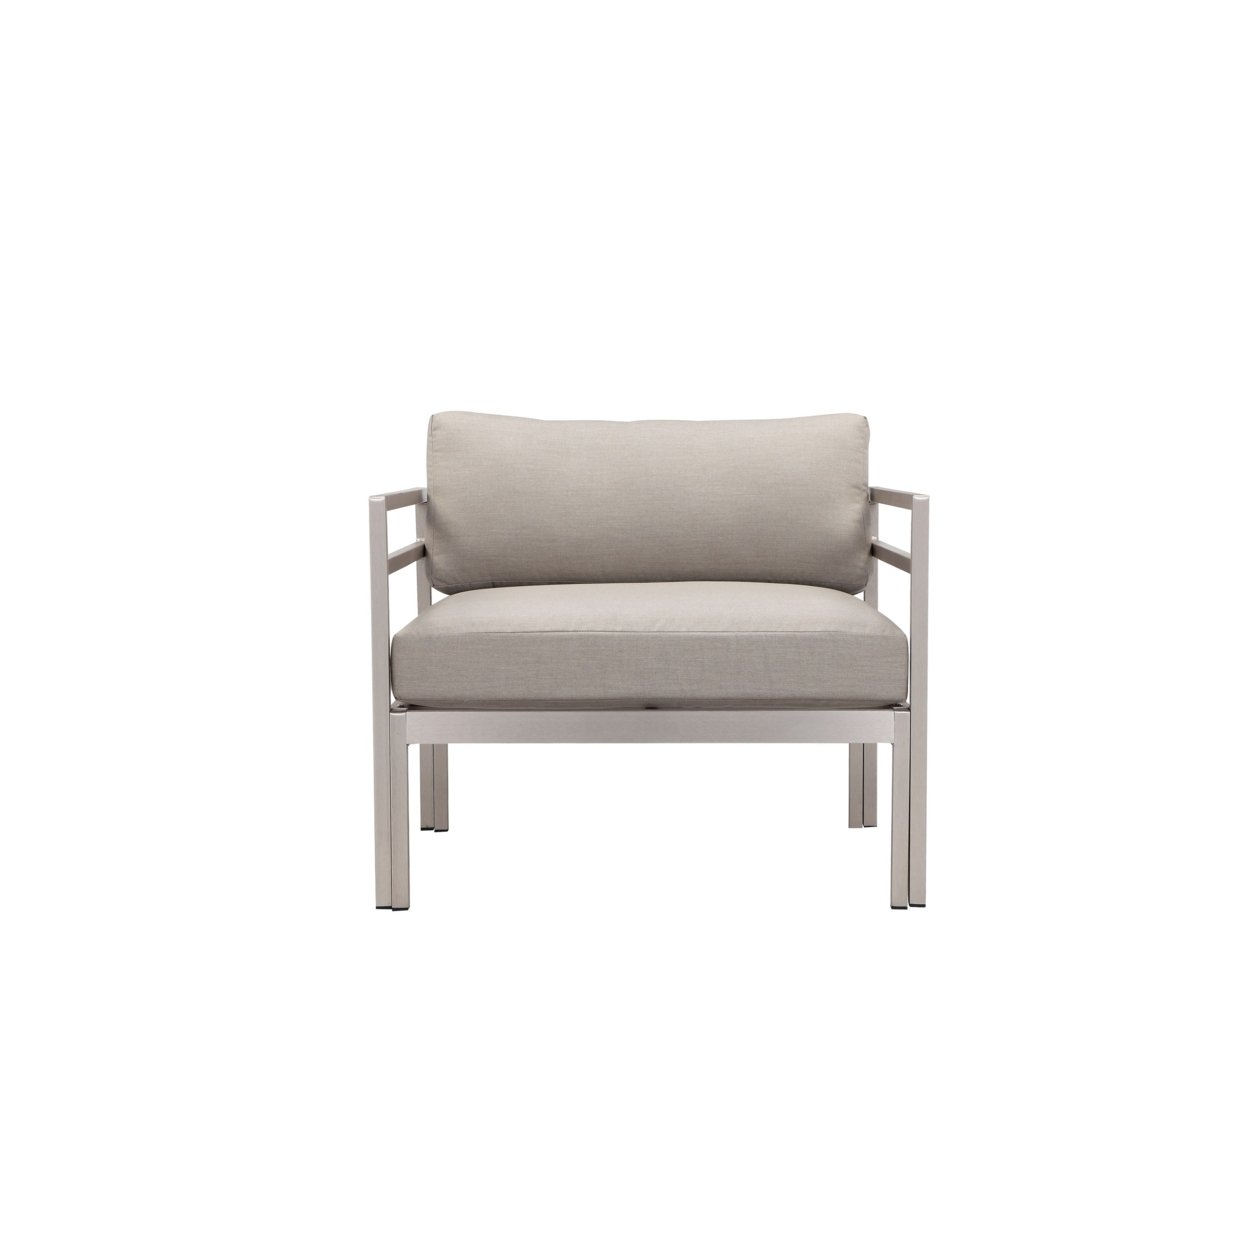 Billy 34 Inch Modern Outdoor Armchair, Gray Aluminum Frame, Fabric Cushions- Saltoro Sherpi